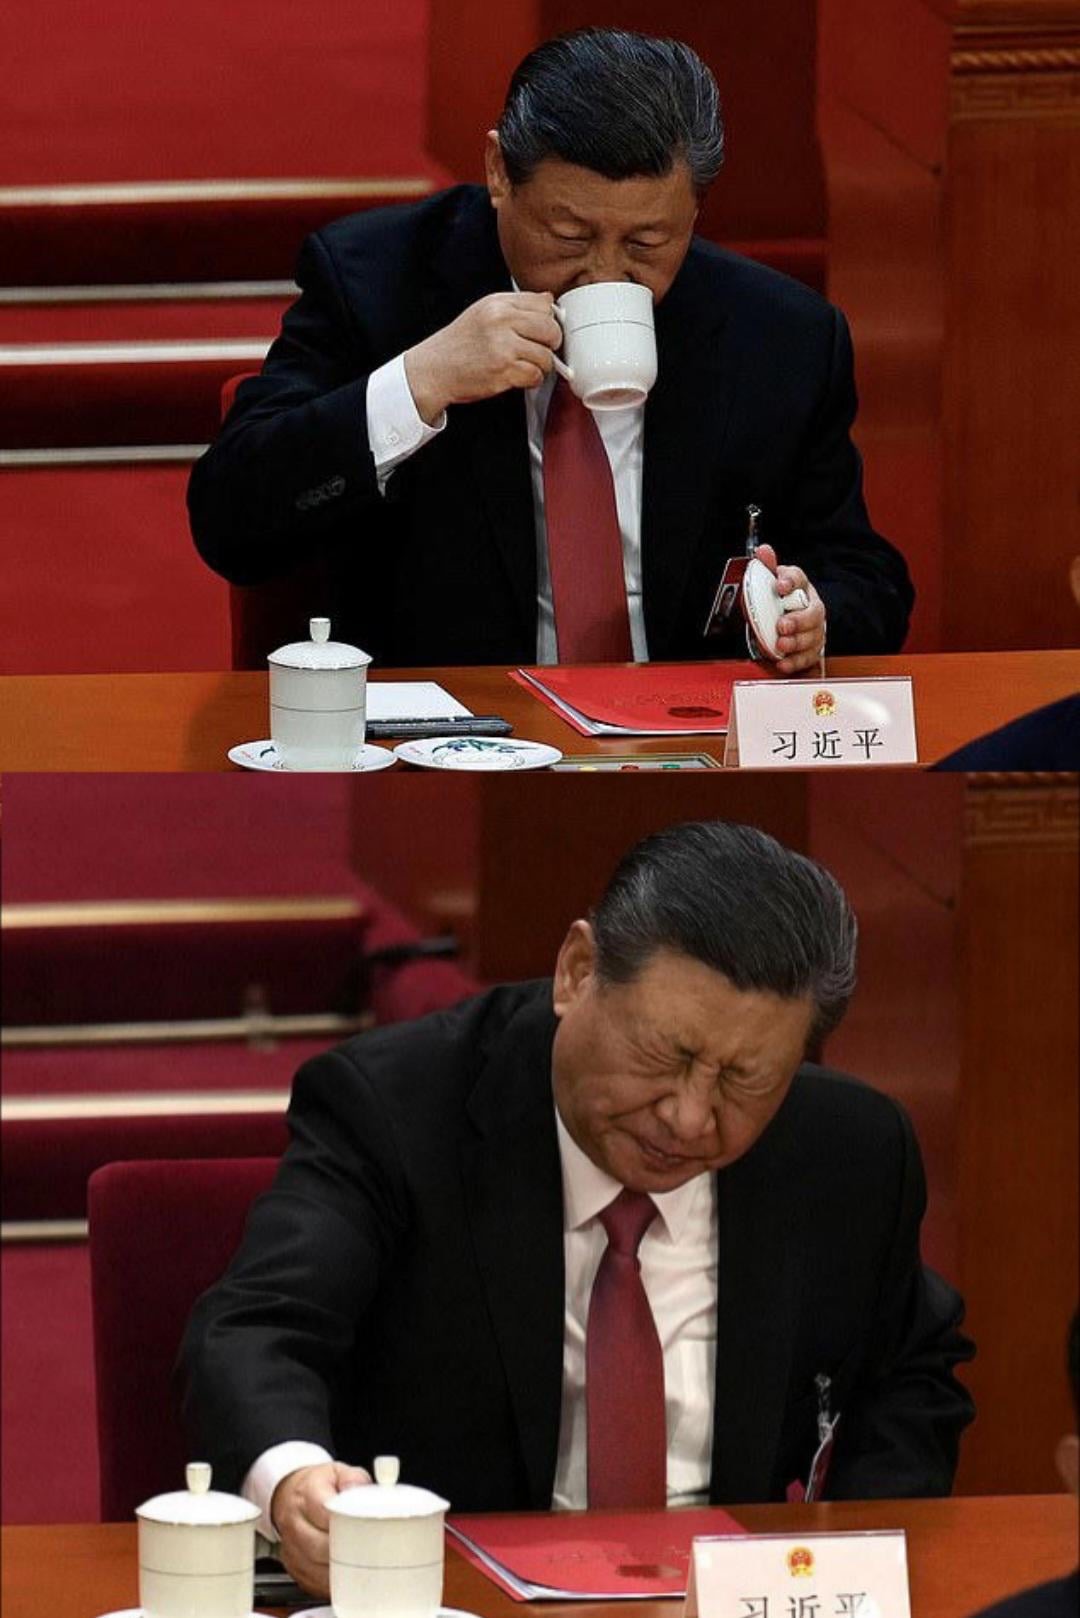 Xi Jinping Drinking Tea Blank Meme Template